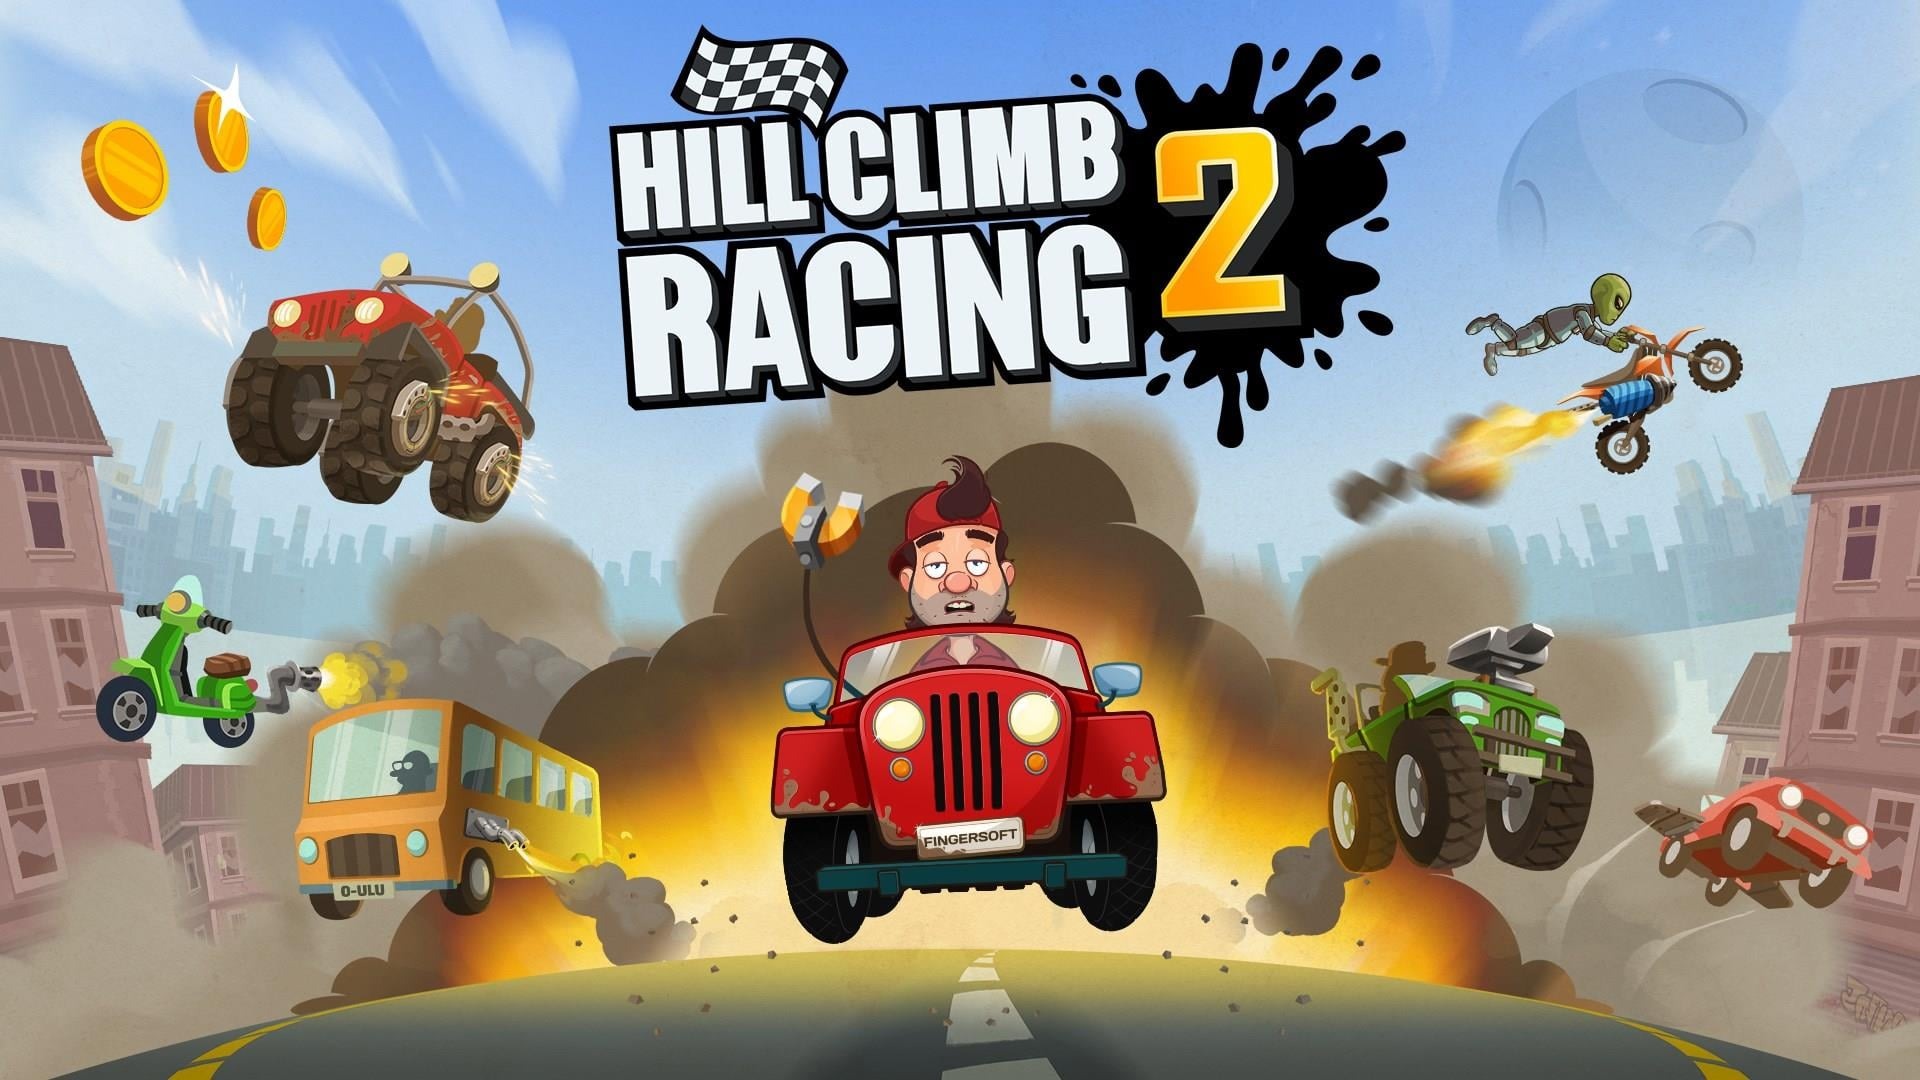 climb hill racing 2 cheats 1.15 windows 10